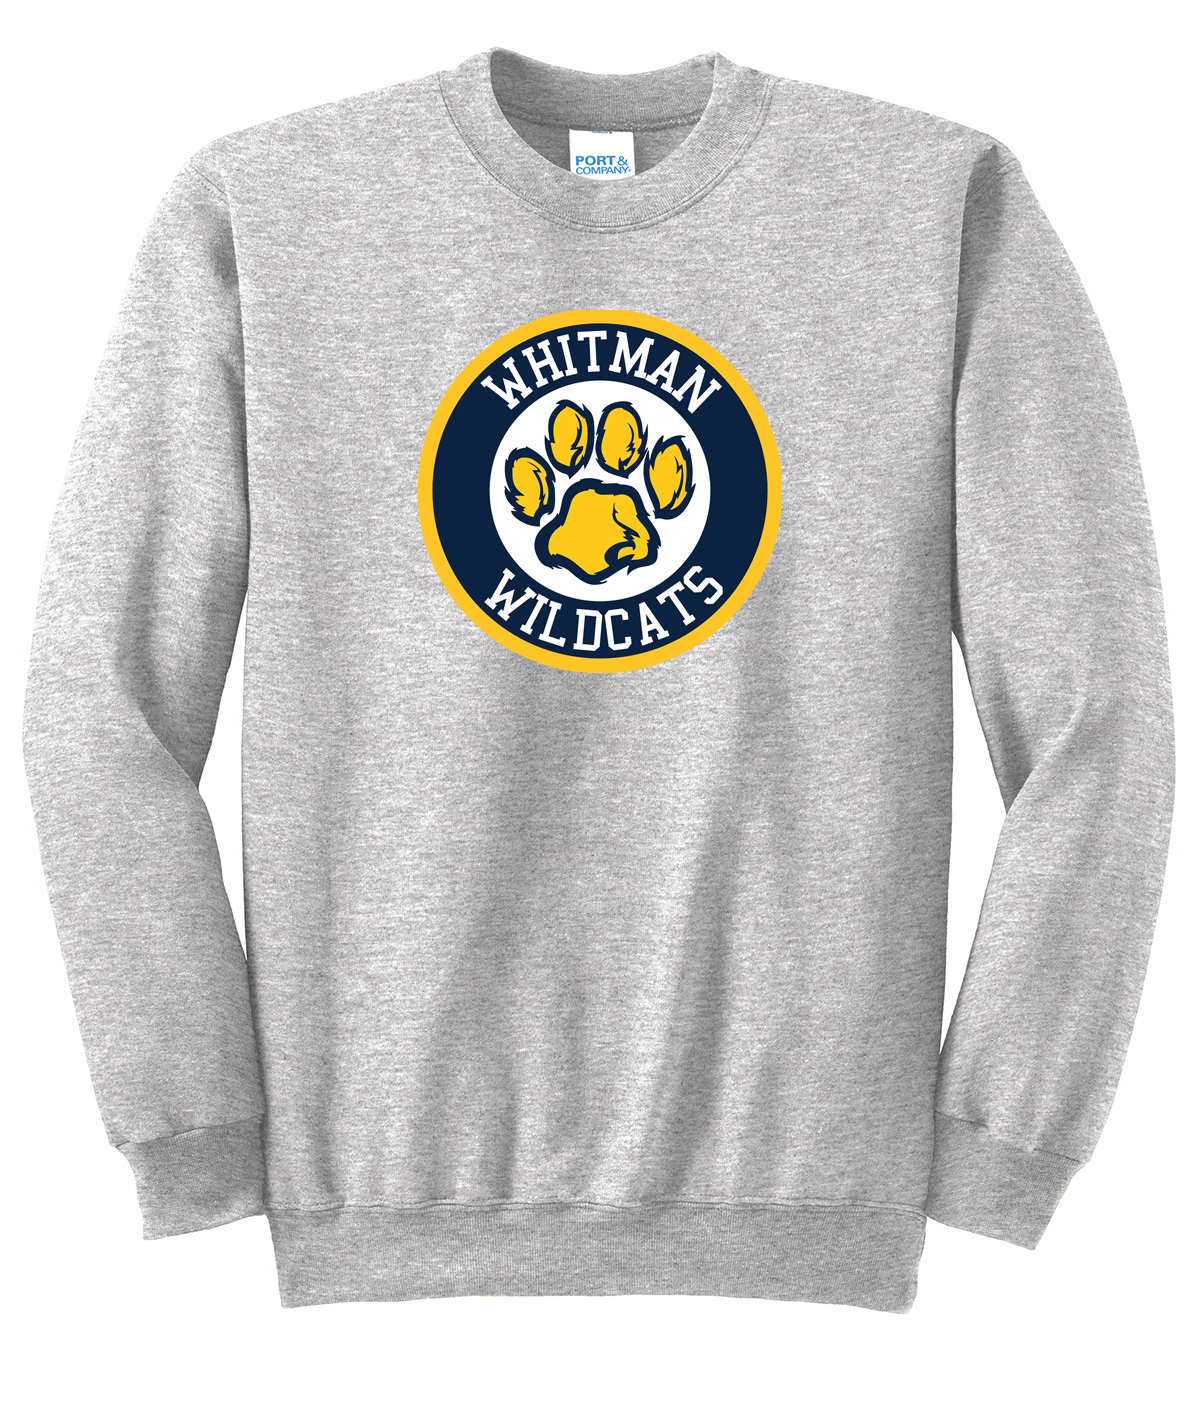 Whitman Wildcats Crew Neck Sweater